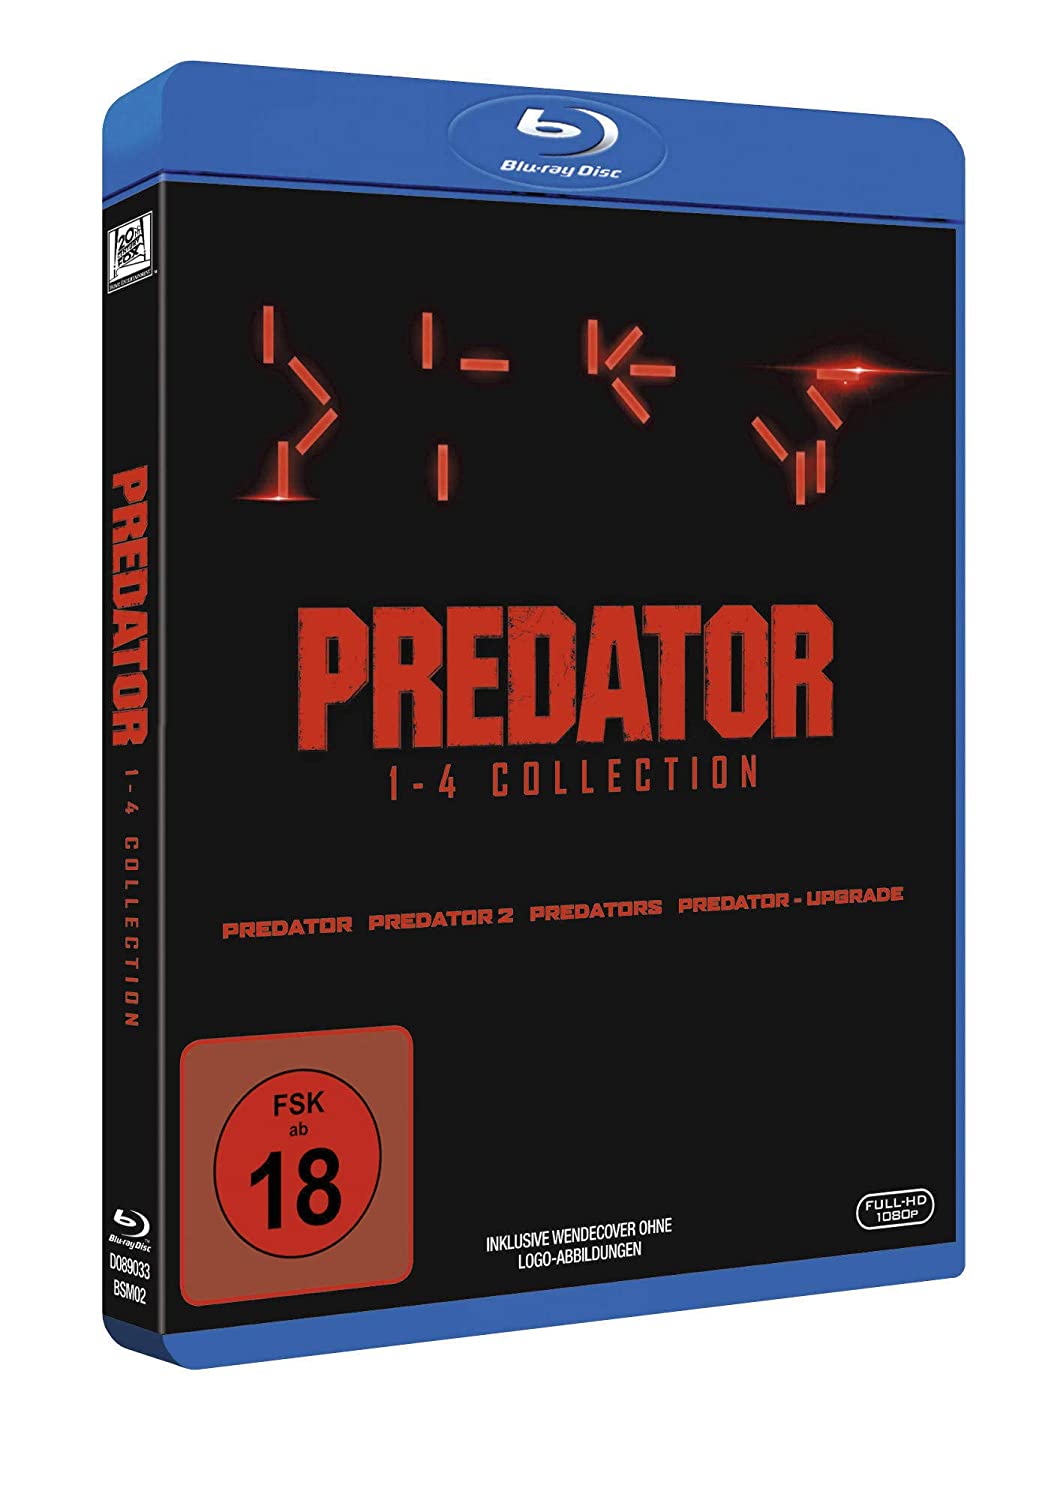 Predator 1 - 4 Collection